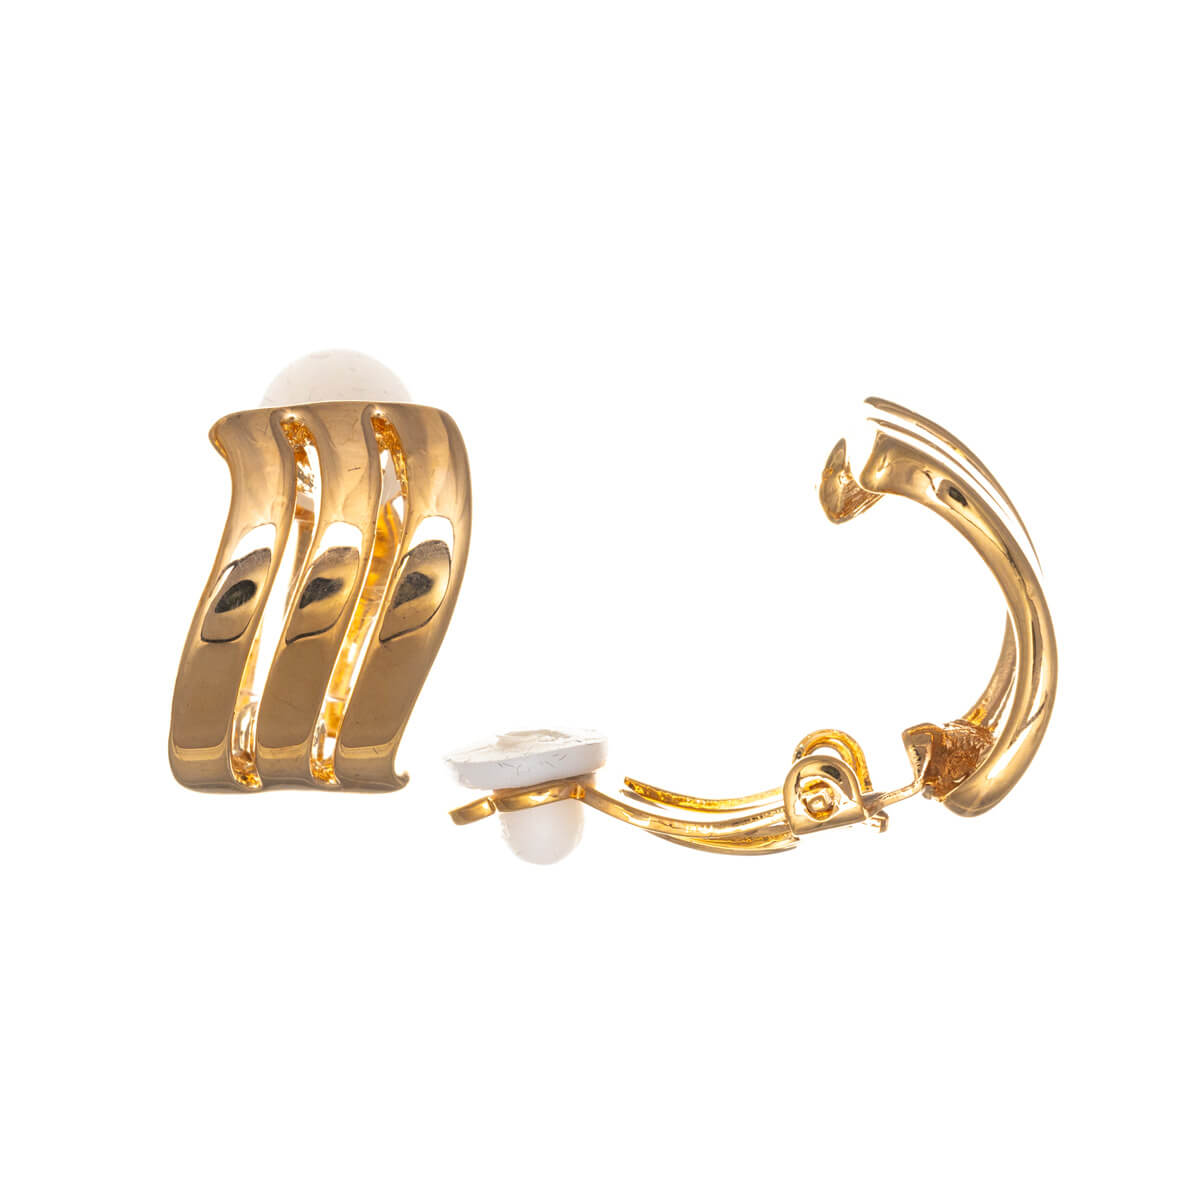 Wavy curved clip earrings